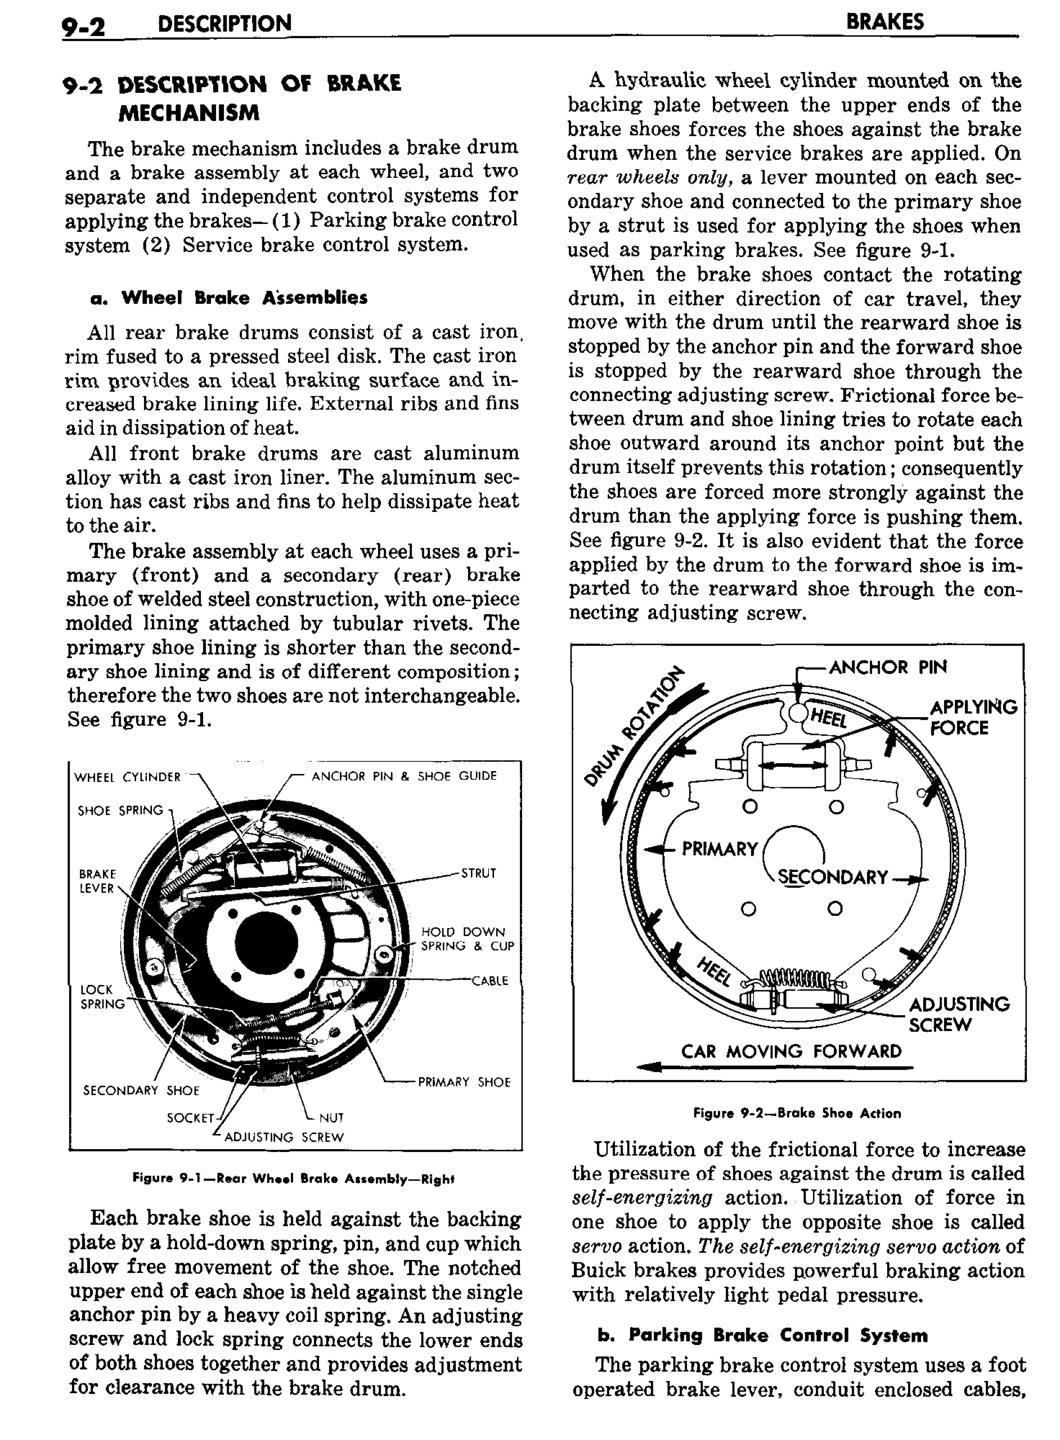 n_10 1959 Buick Shop Manual - Brakes-002-002.jpg